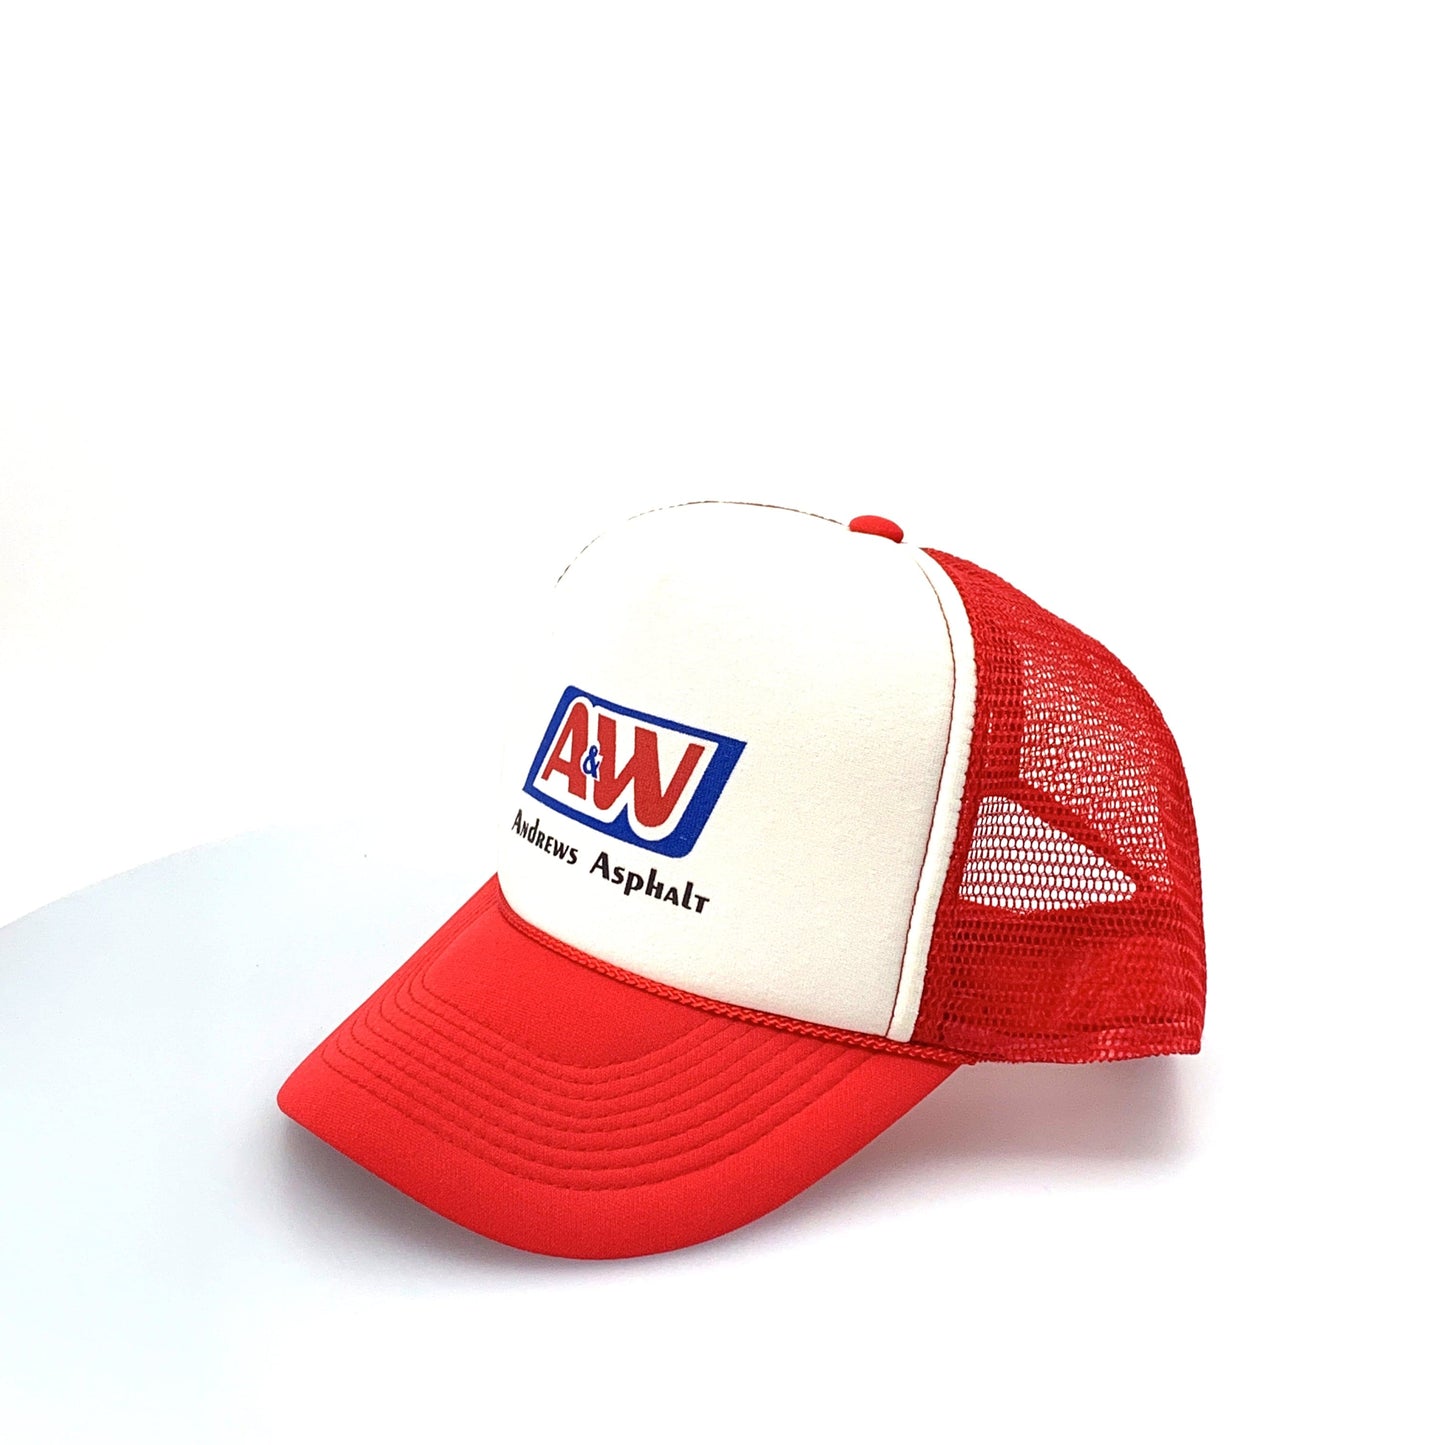 Otto Headwear A&W ANDREWS ASPHALT SnapBack Trucker Hat Red White - OSFM